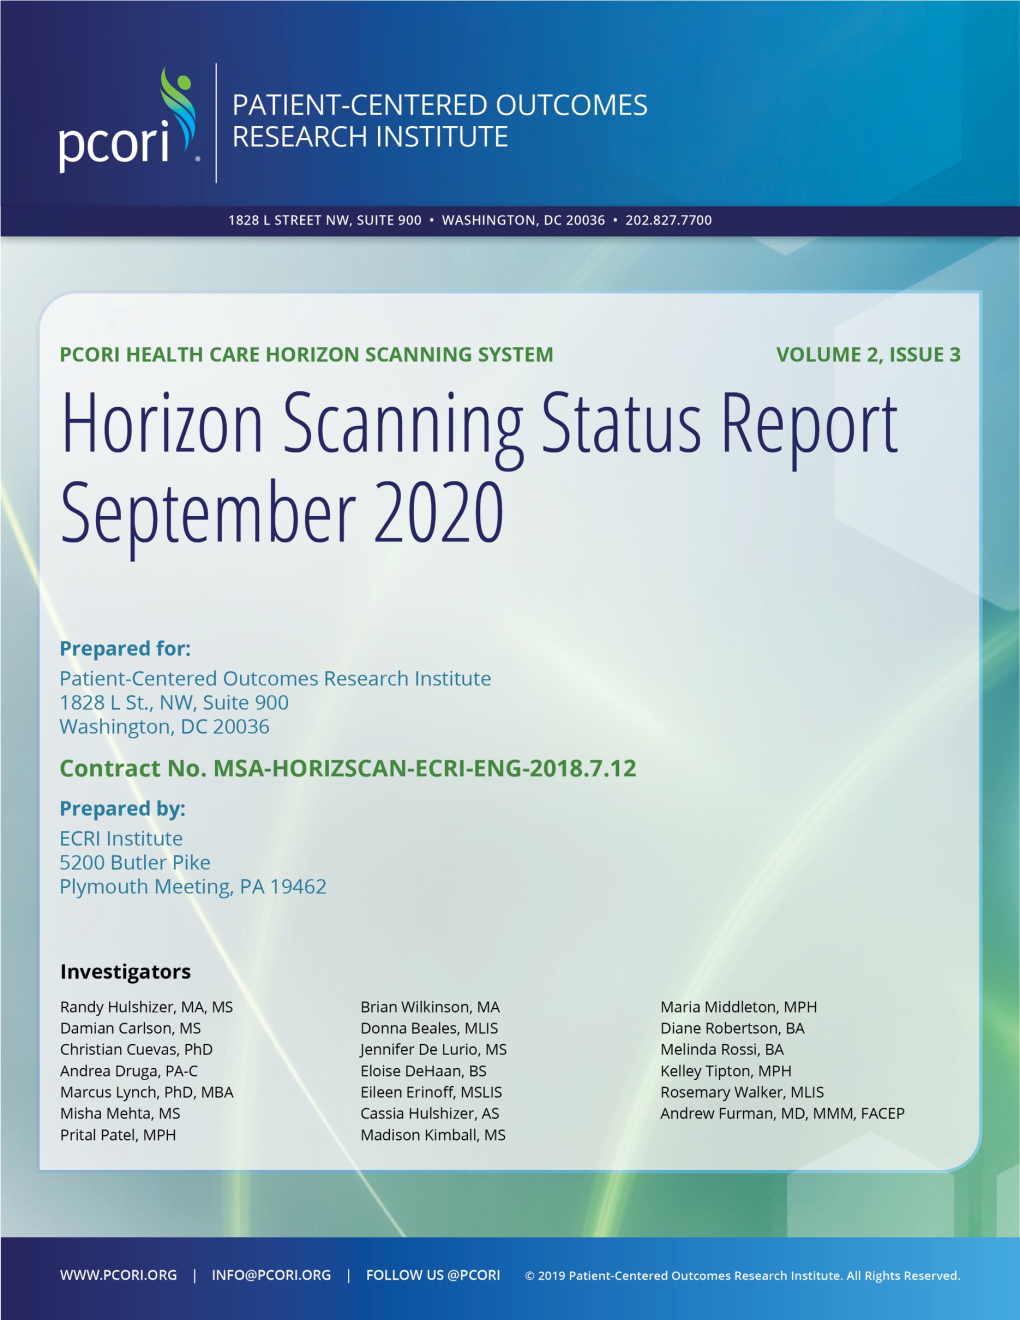 Horizon Scanning Status Report, Volume 2